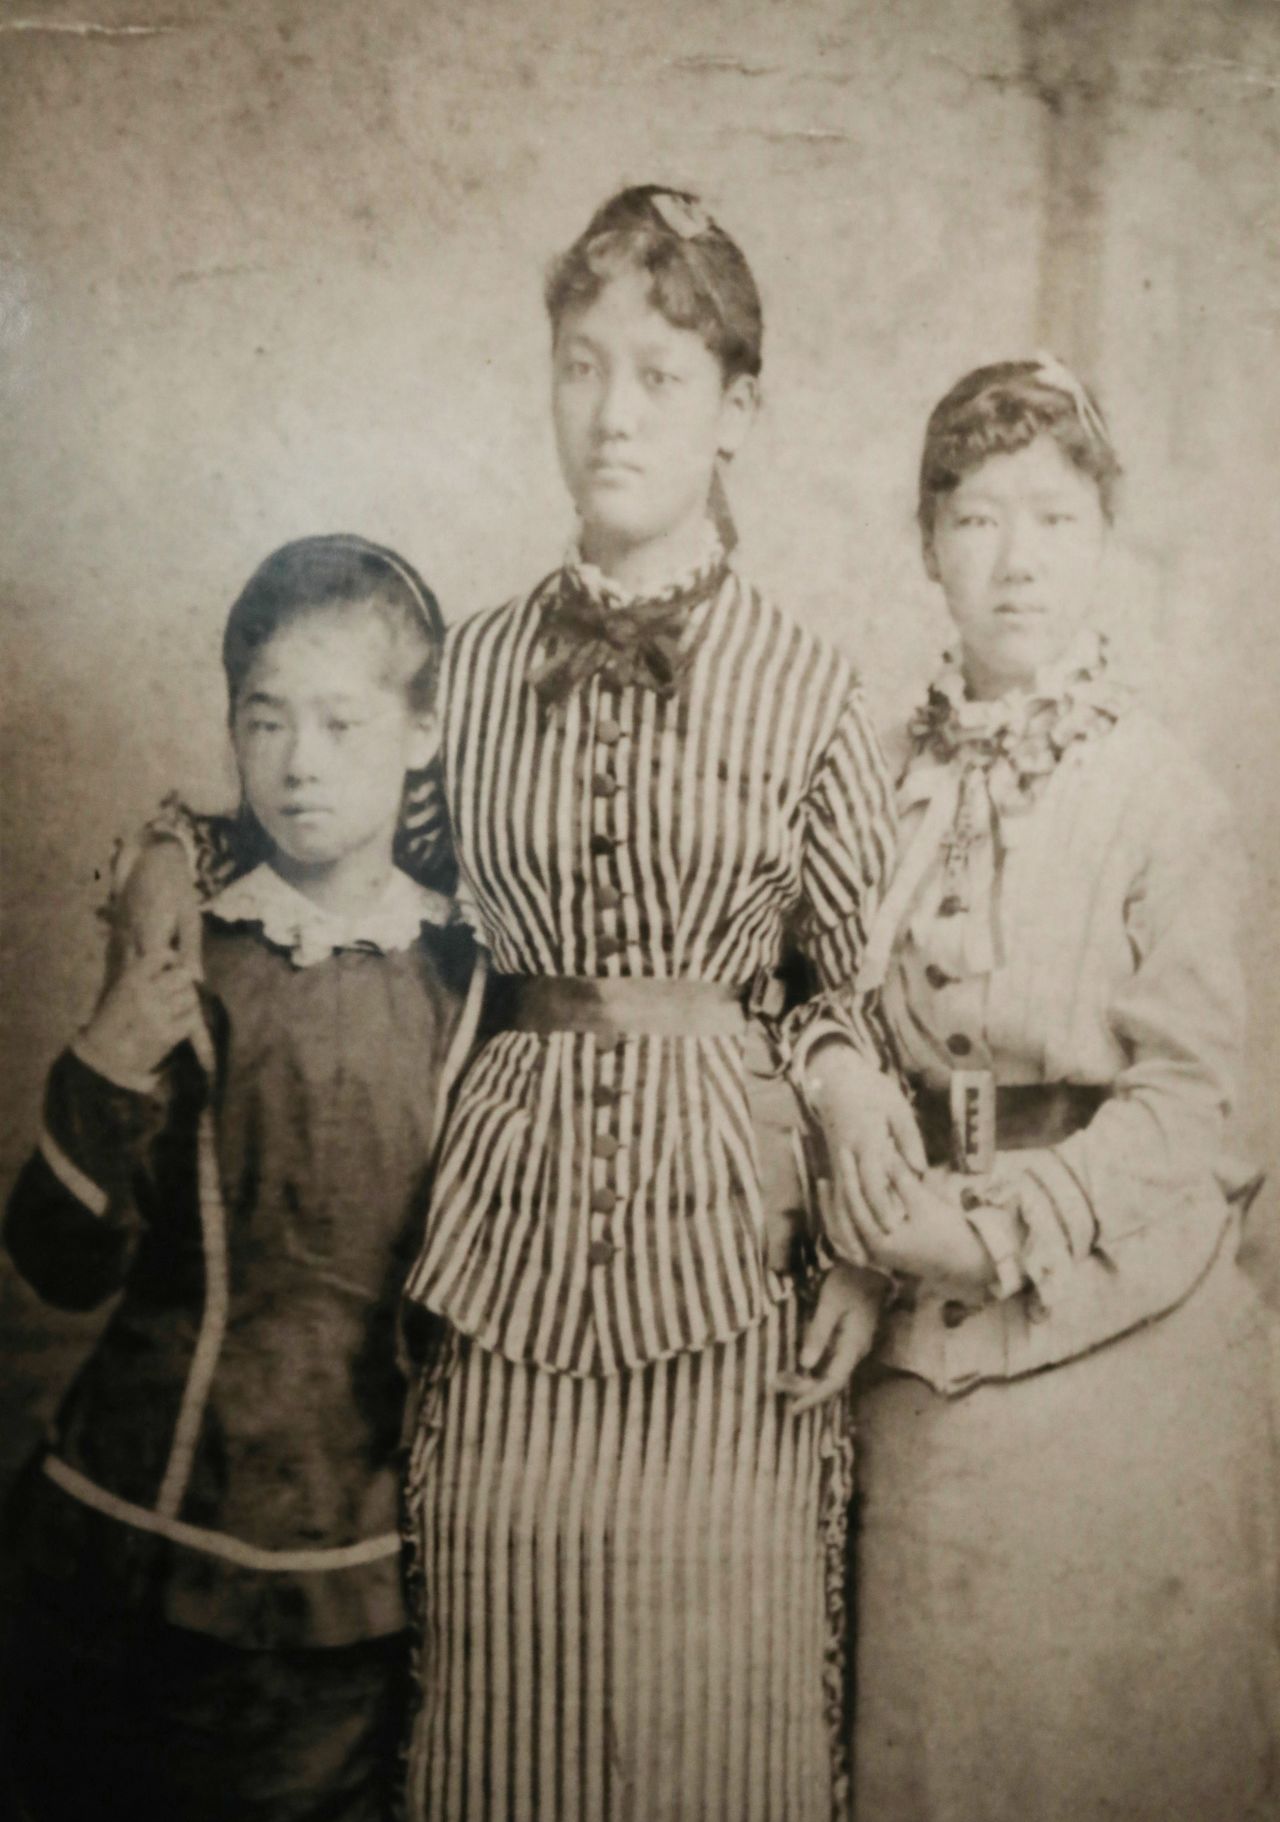 The delegation of female Japanese students, photographed at the Centennial Exposition in Philadelphia, 1876. From left to right, Tsuda Umeko, Yamakawa Sutematsu, Nagai Shigeko. (Courtesy Tsuda University; © Jiji)